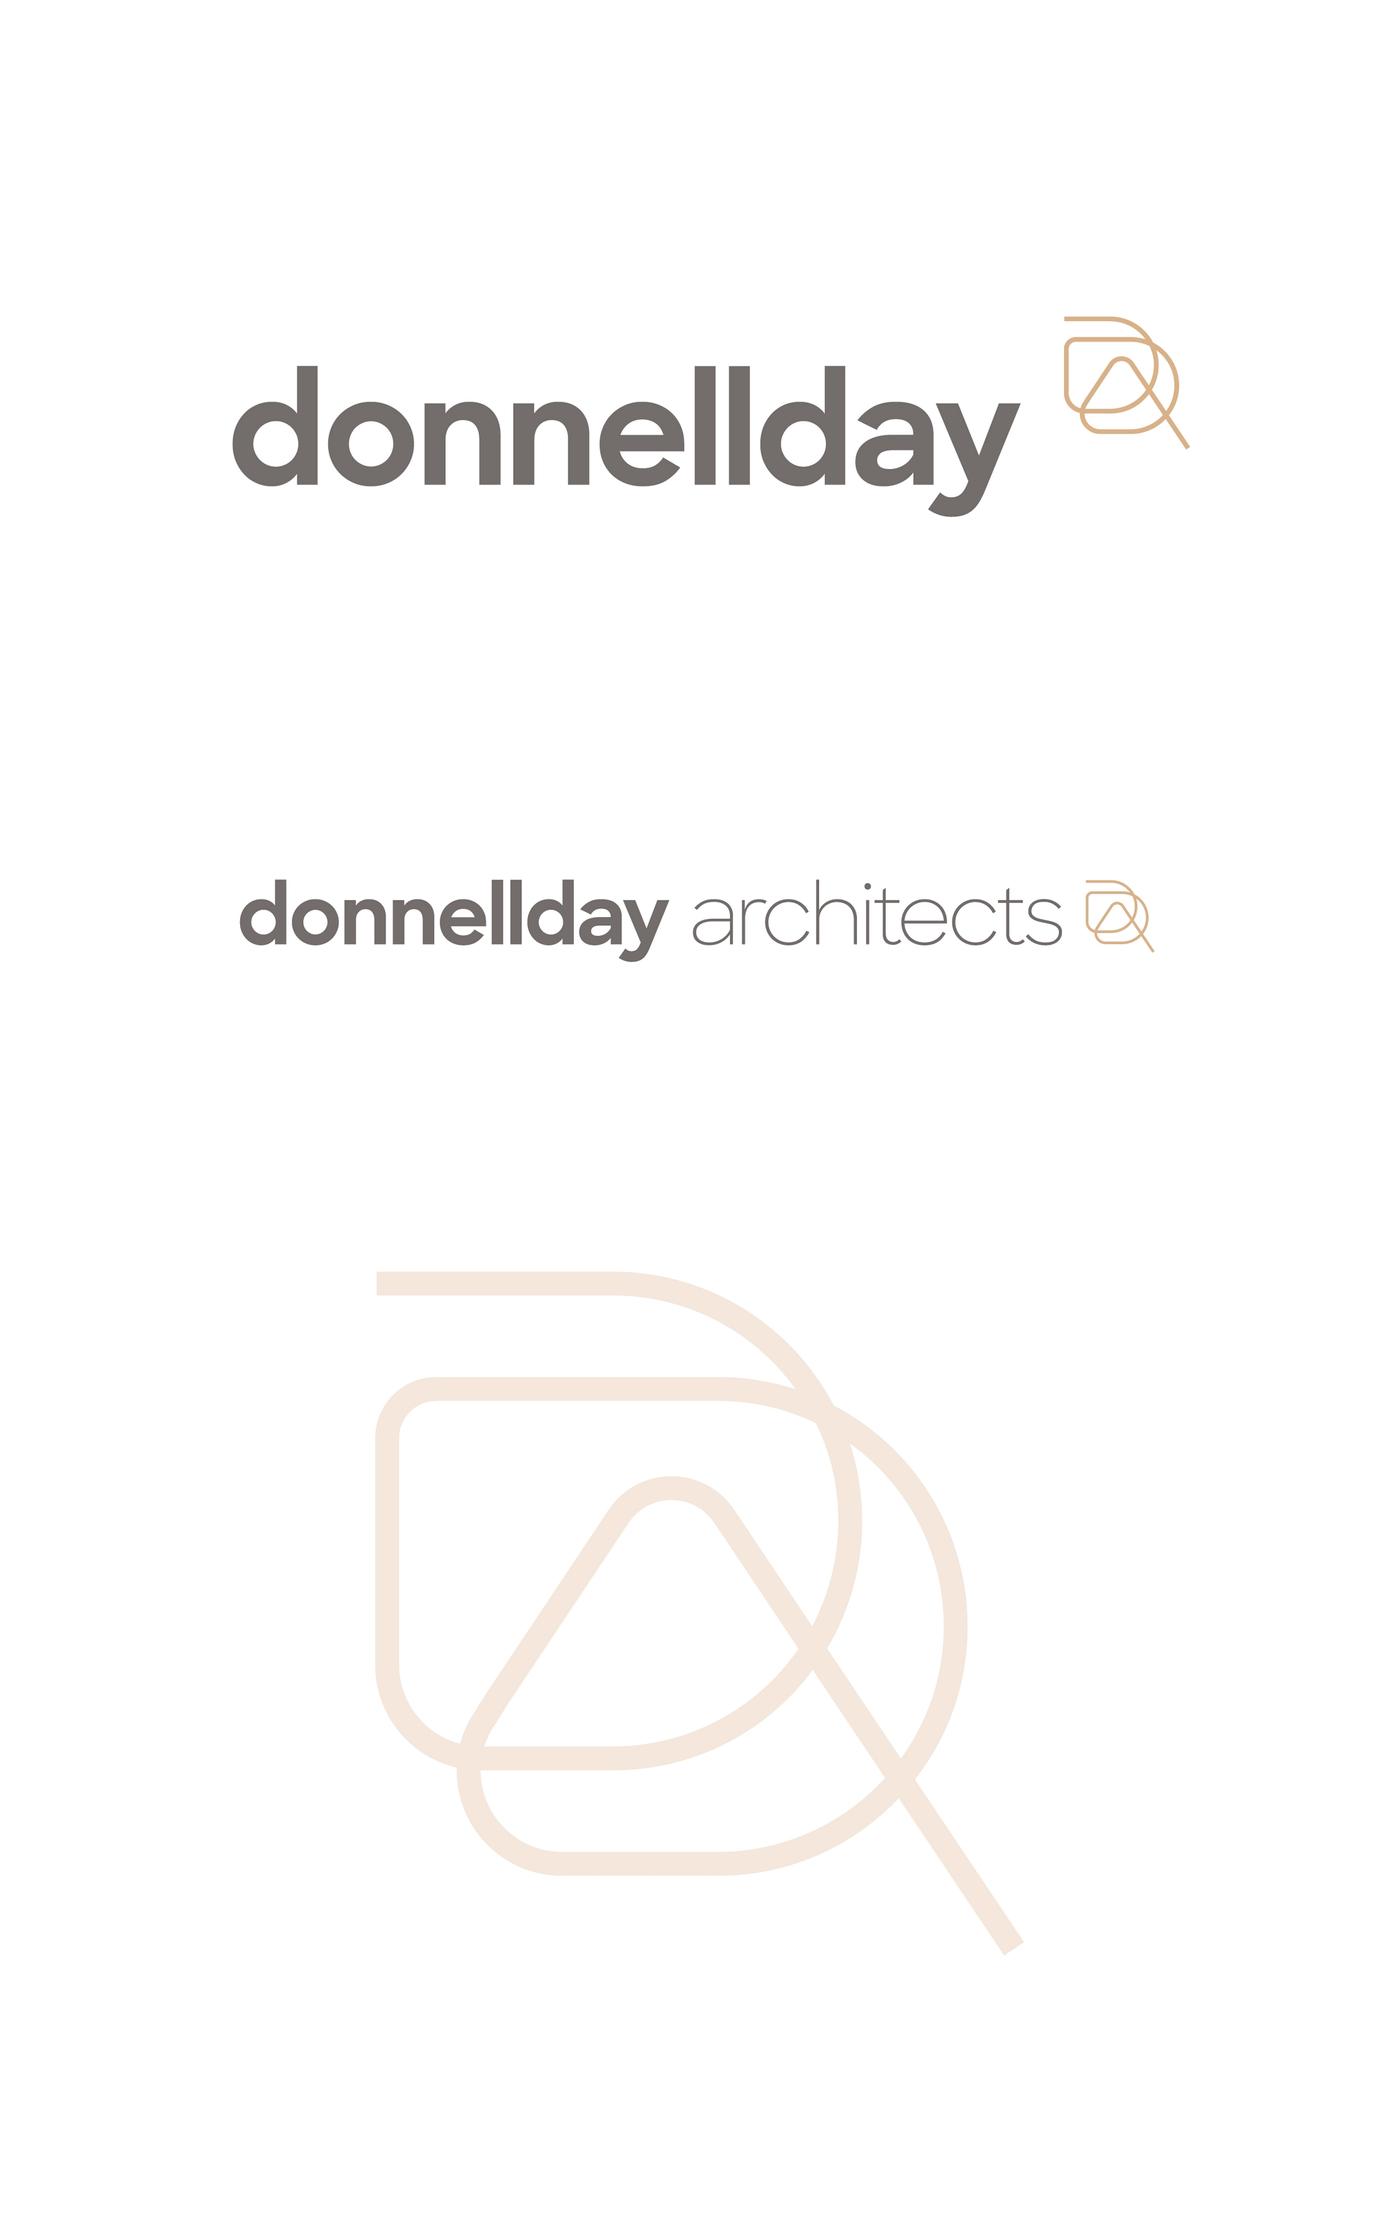 DonnellDay identity